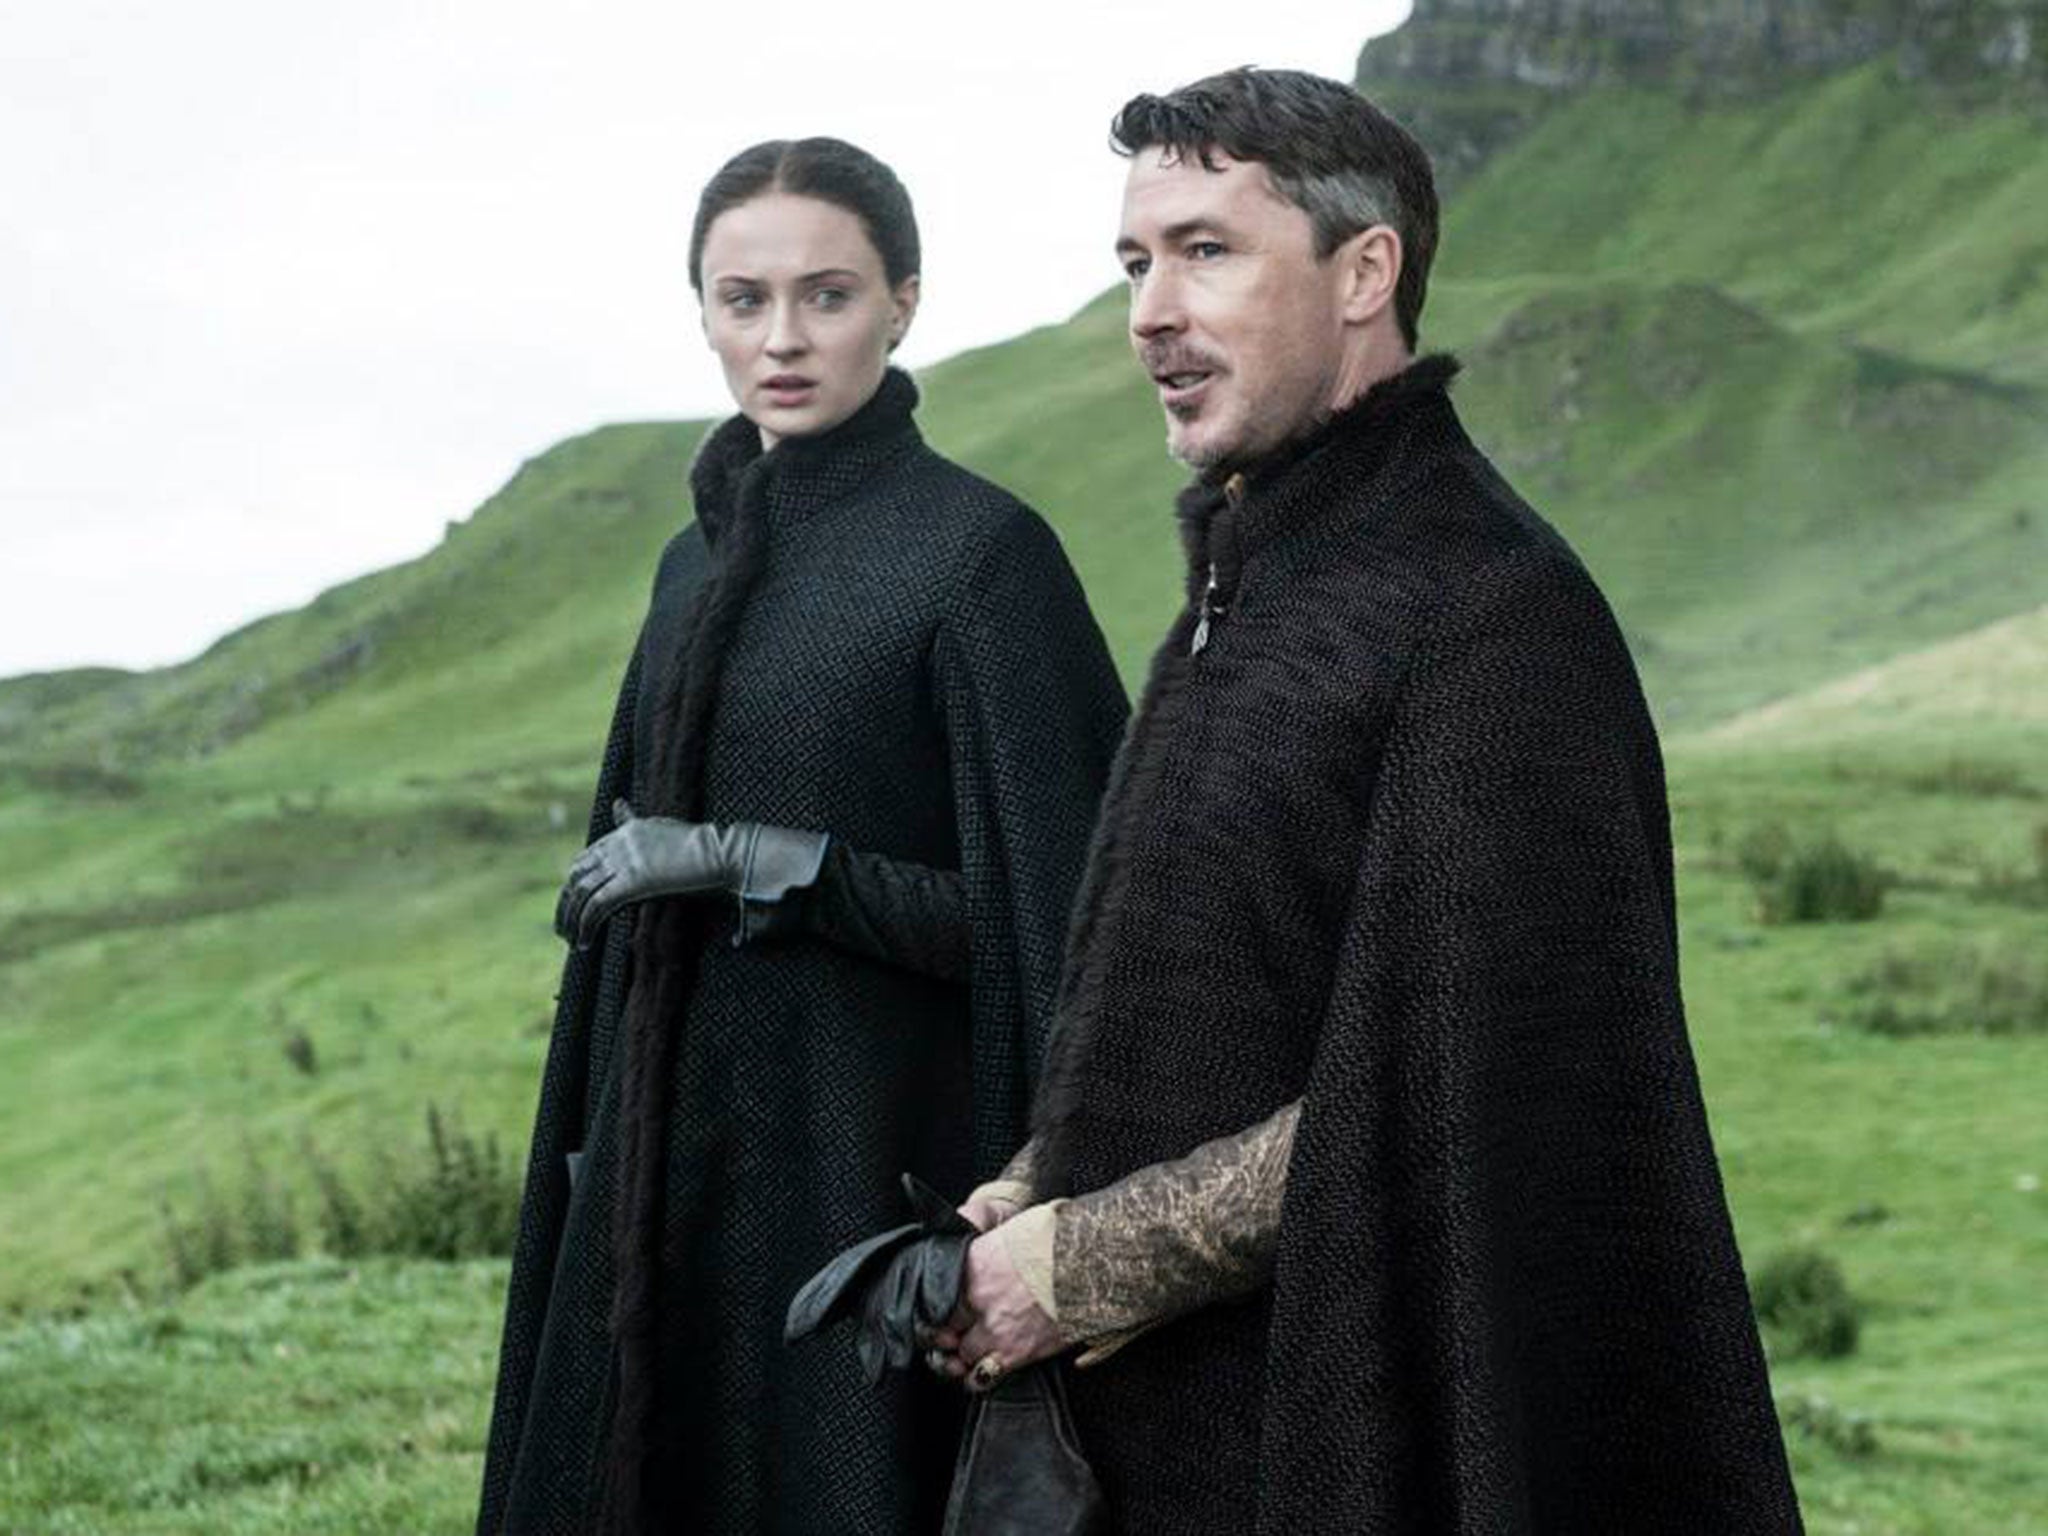 Sophie Turner as Sansa Stark and Aidan Gillen as Littlefinger in Game of Thrones